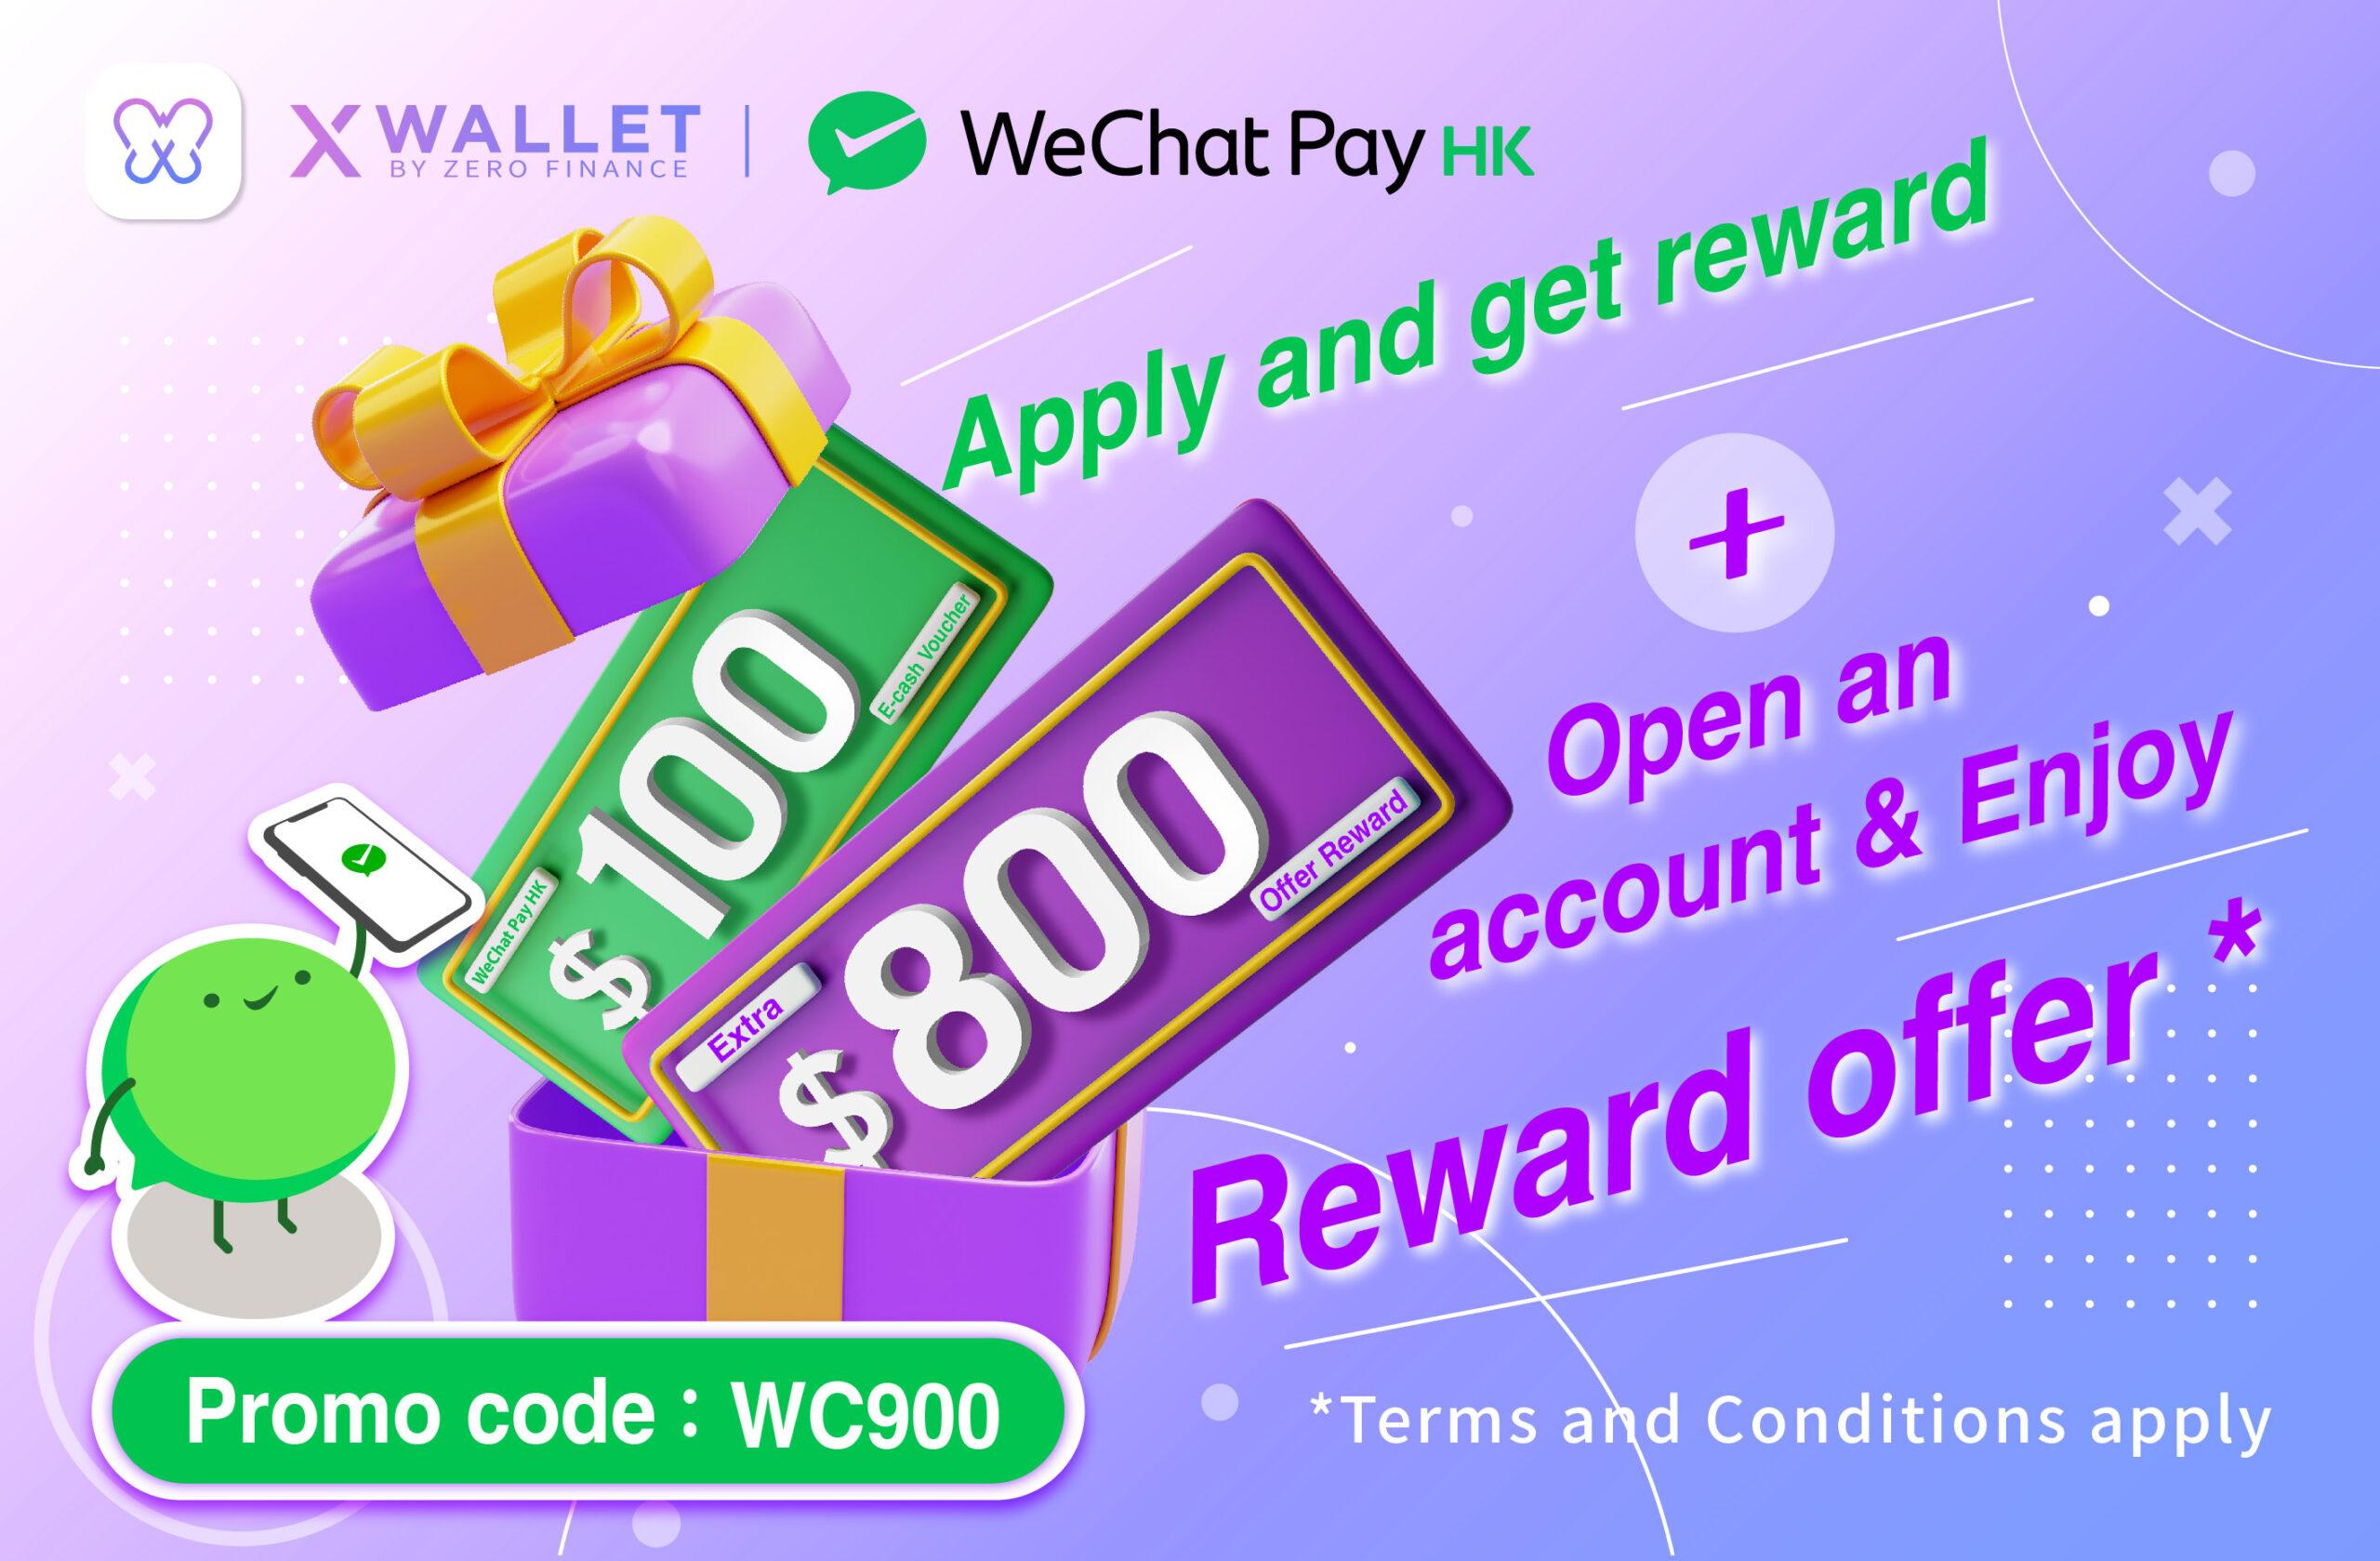 【Extra Welcome Offer】X Wallet New Customers Enjoy HK$100 WeChat Pay HK E-cash Voucher & HK$800 Cash Rebate